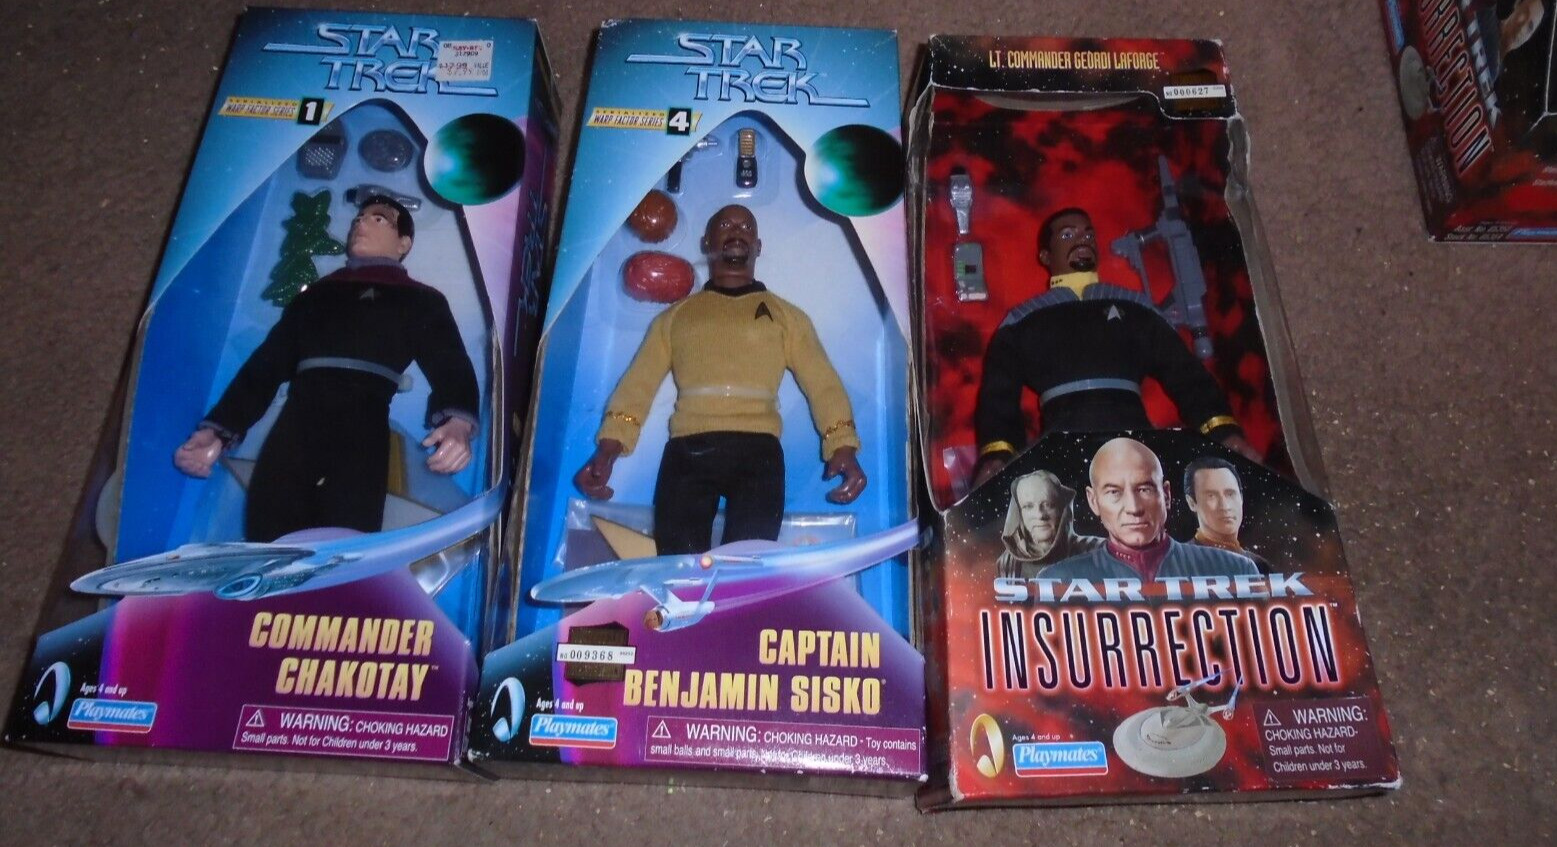 Lot of 3 Star Trek 9" Figures Insurrection, Deep Space Nine, Voyager Playmates